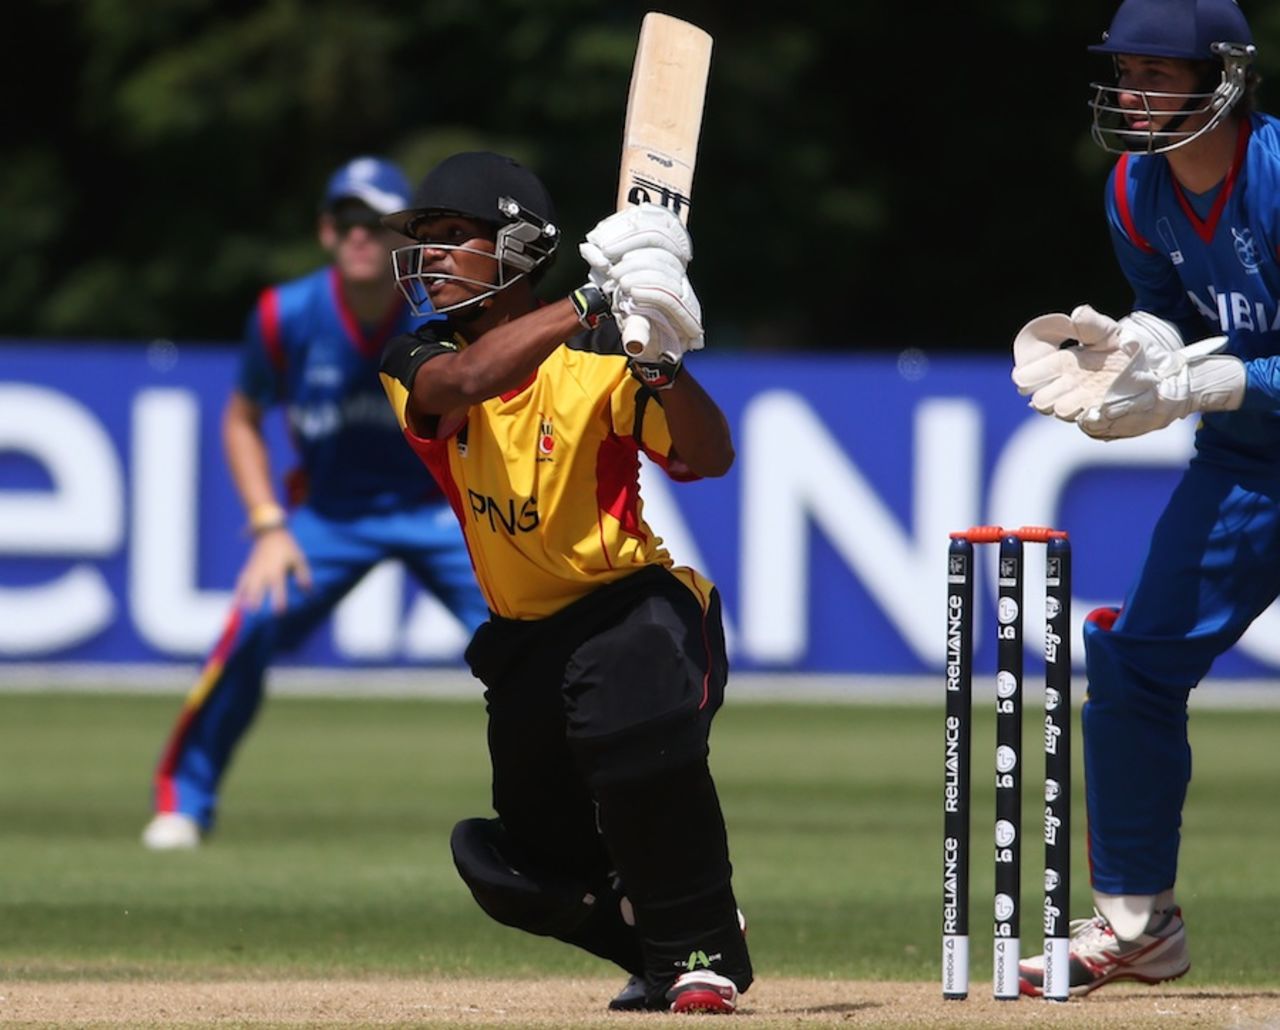 Lega Siaka scored a match-winning century,  Namibia v Papua New Guinea, ICC Cricket World Cup Qualifier, Mount Maunganui, January 23, 2014